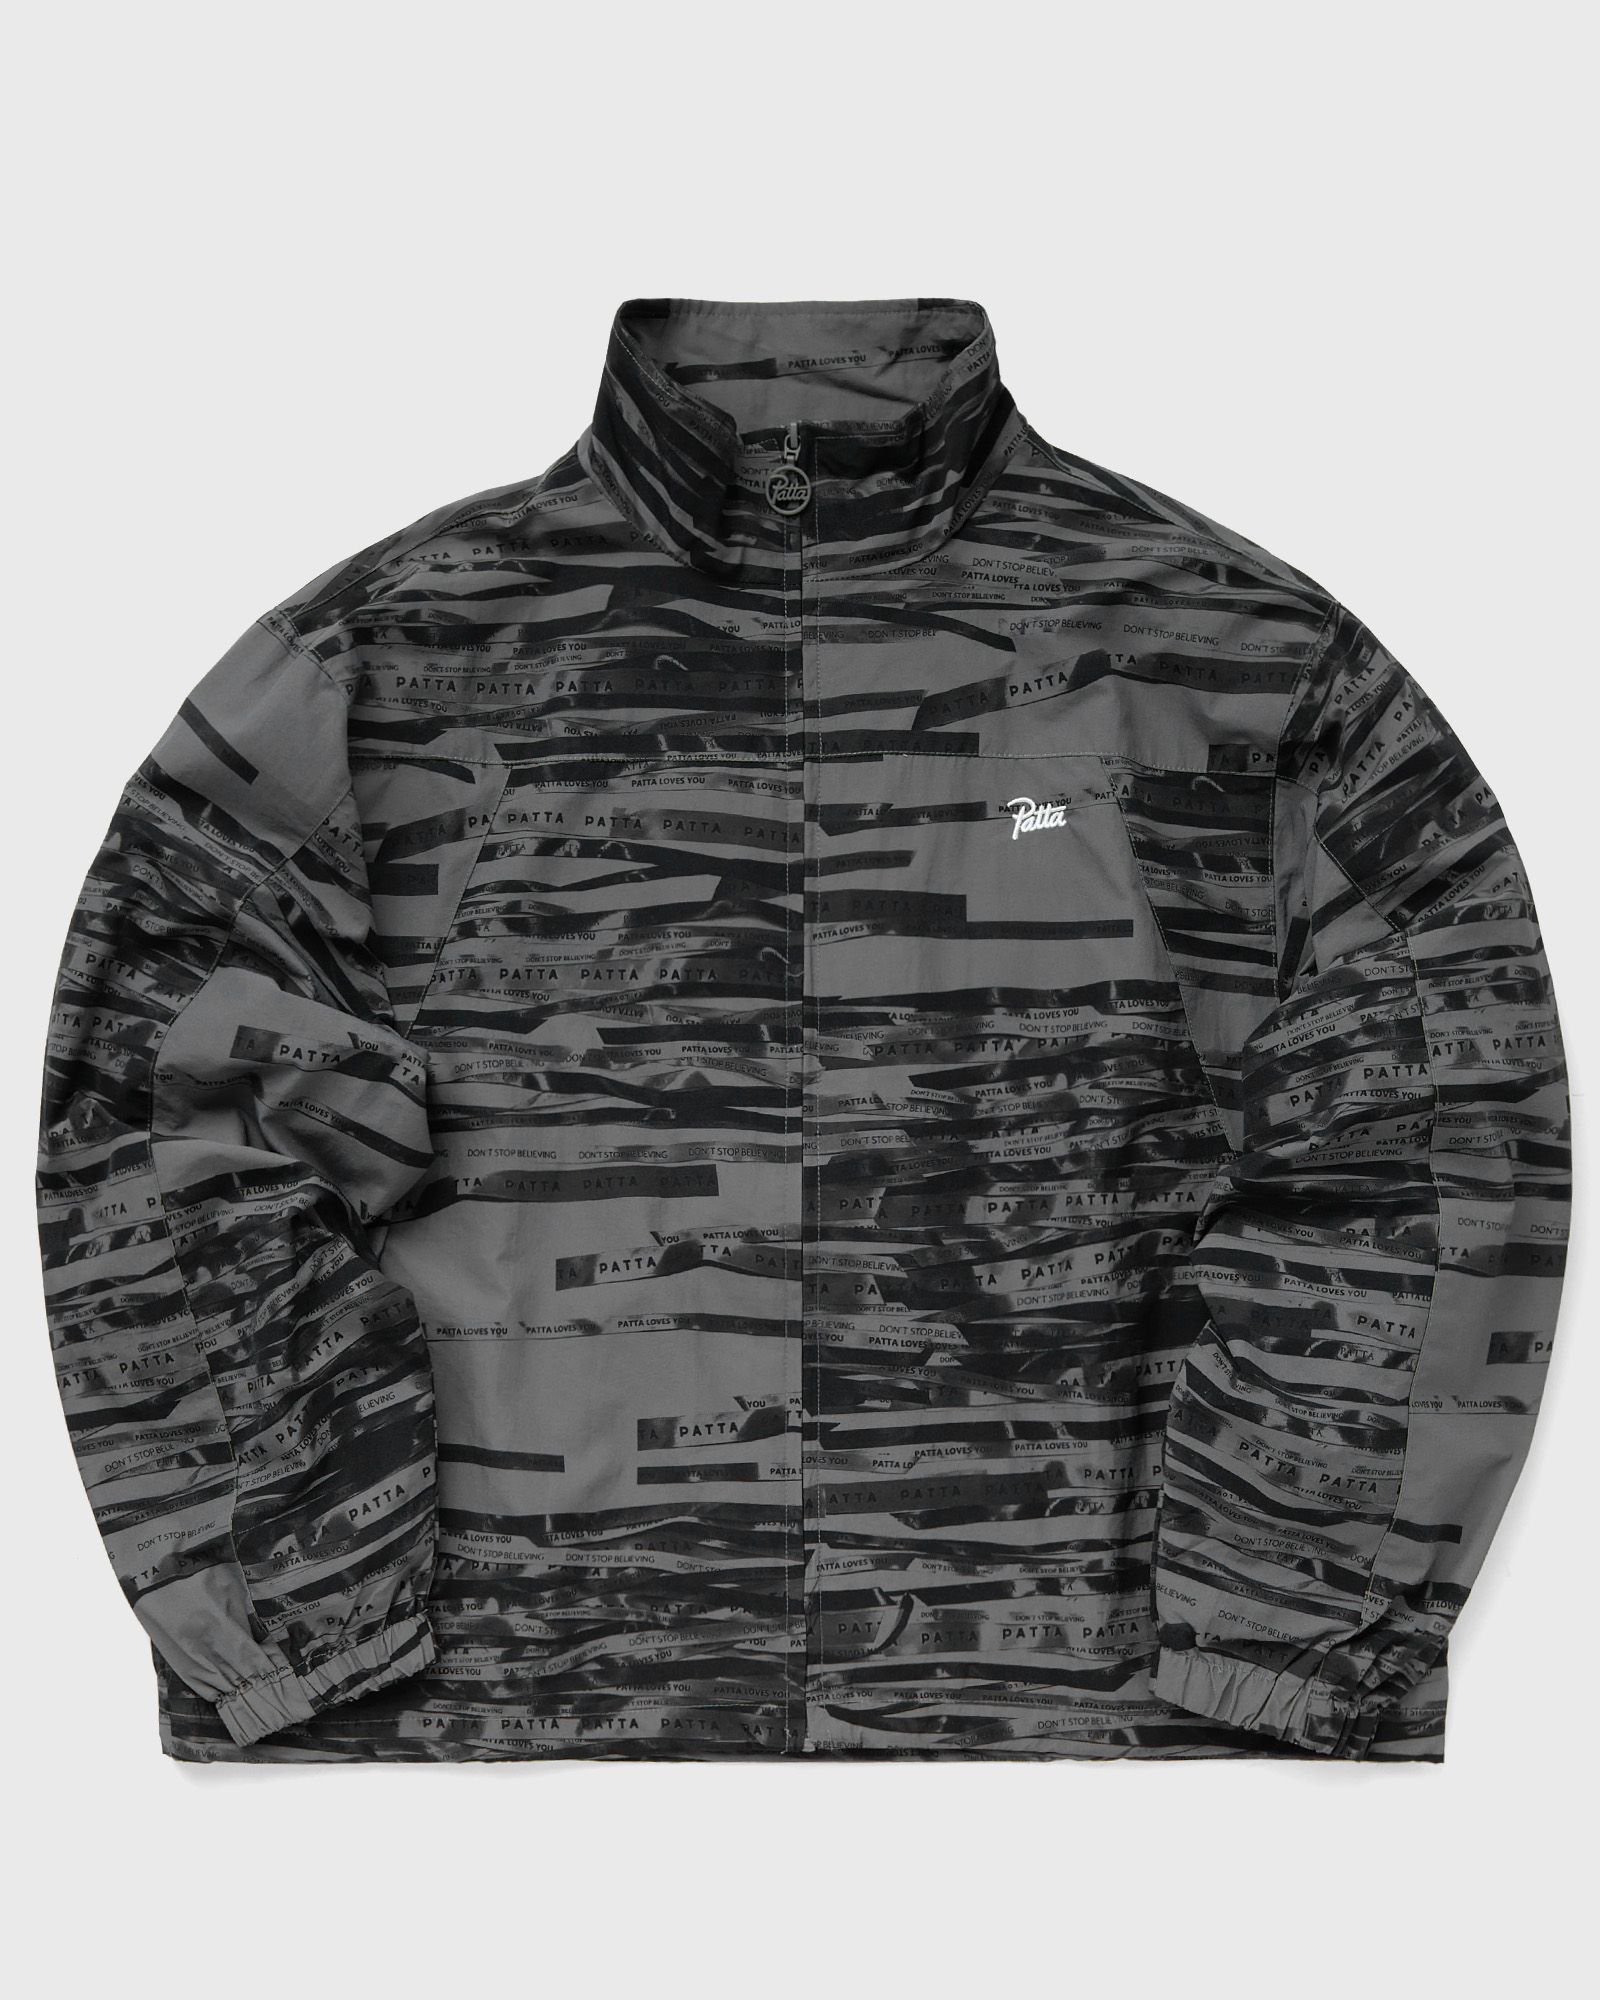 PATTA - ribbons nylon m2 track jacket men track jackets black|grey in größe:l